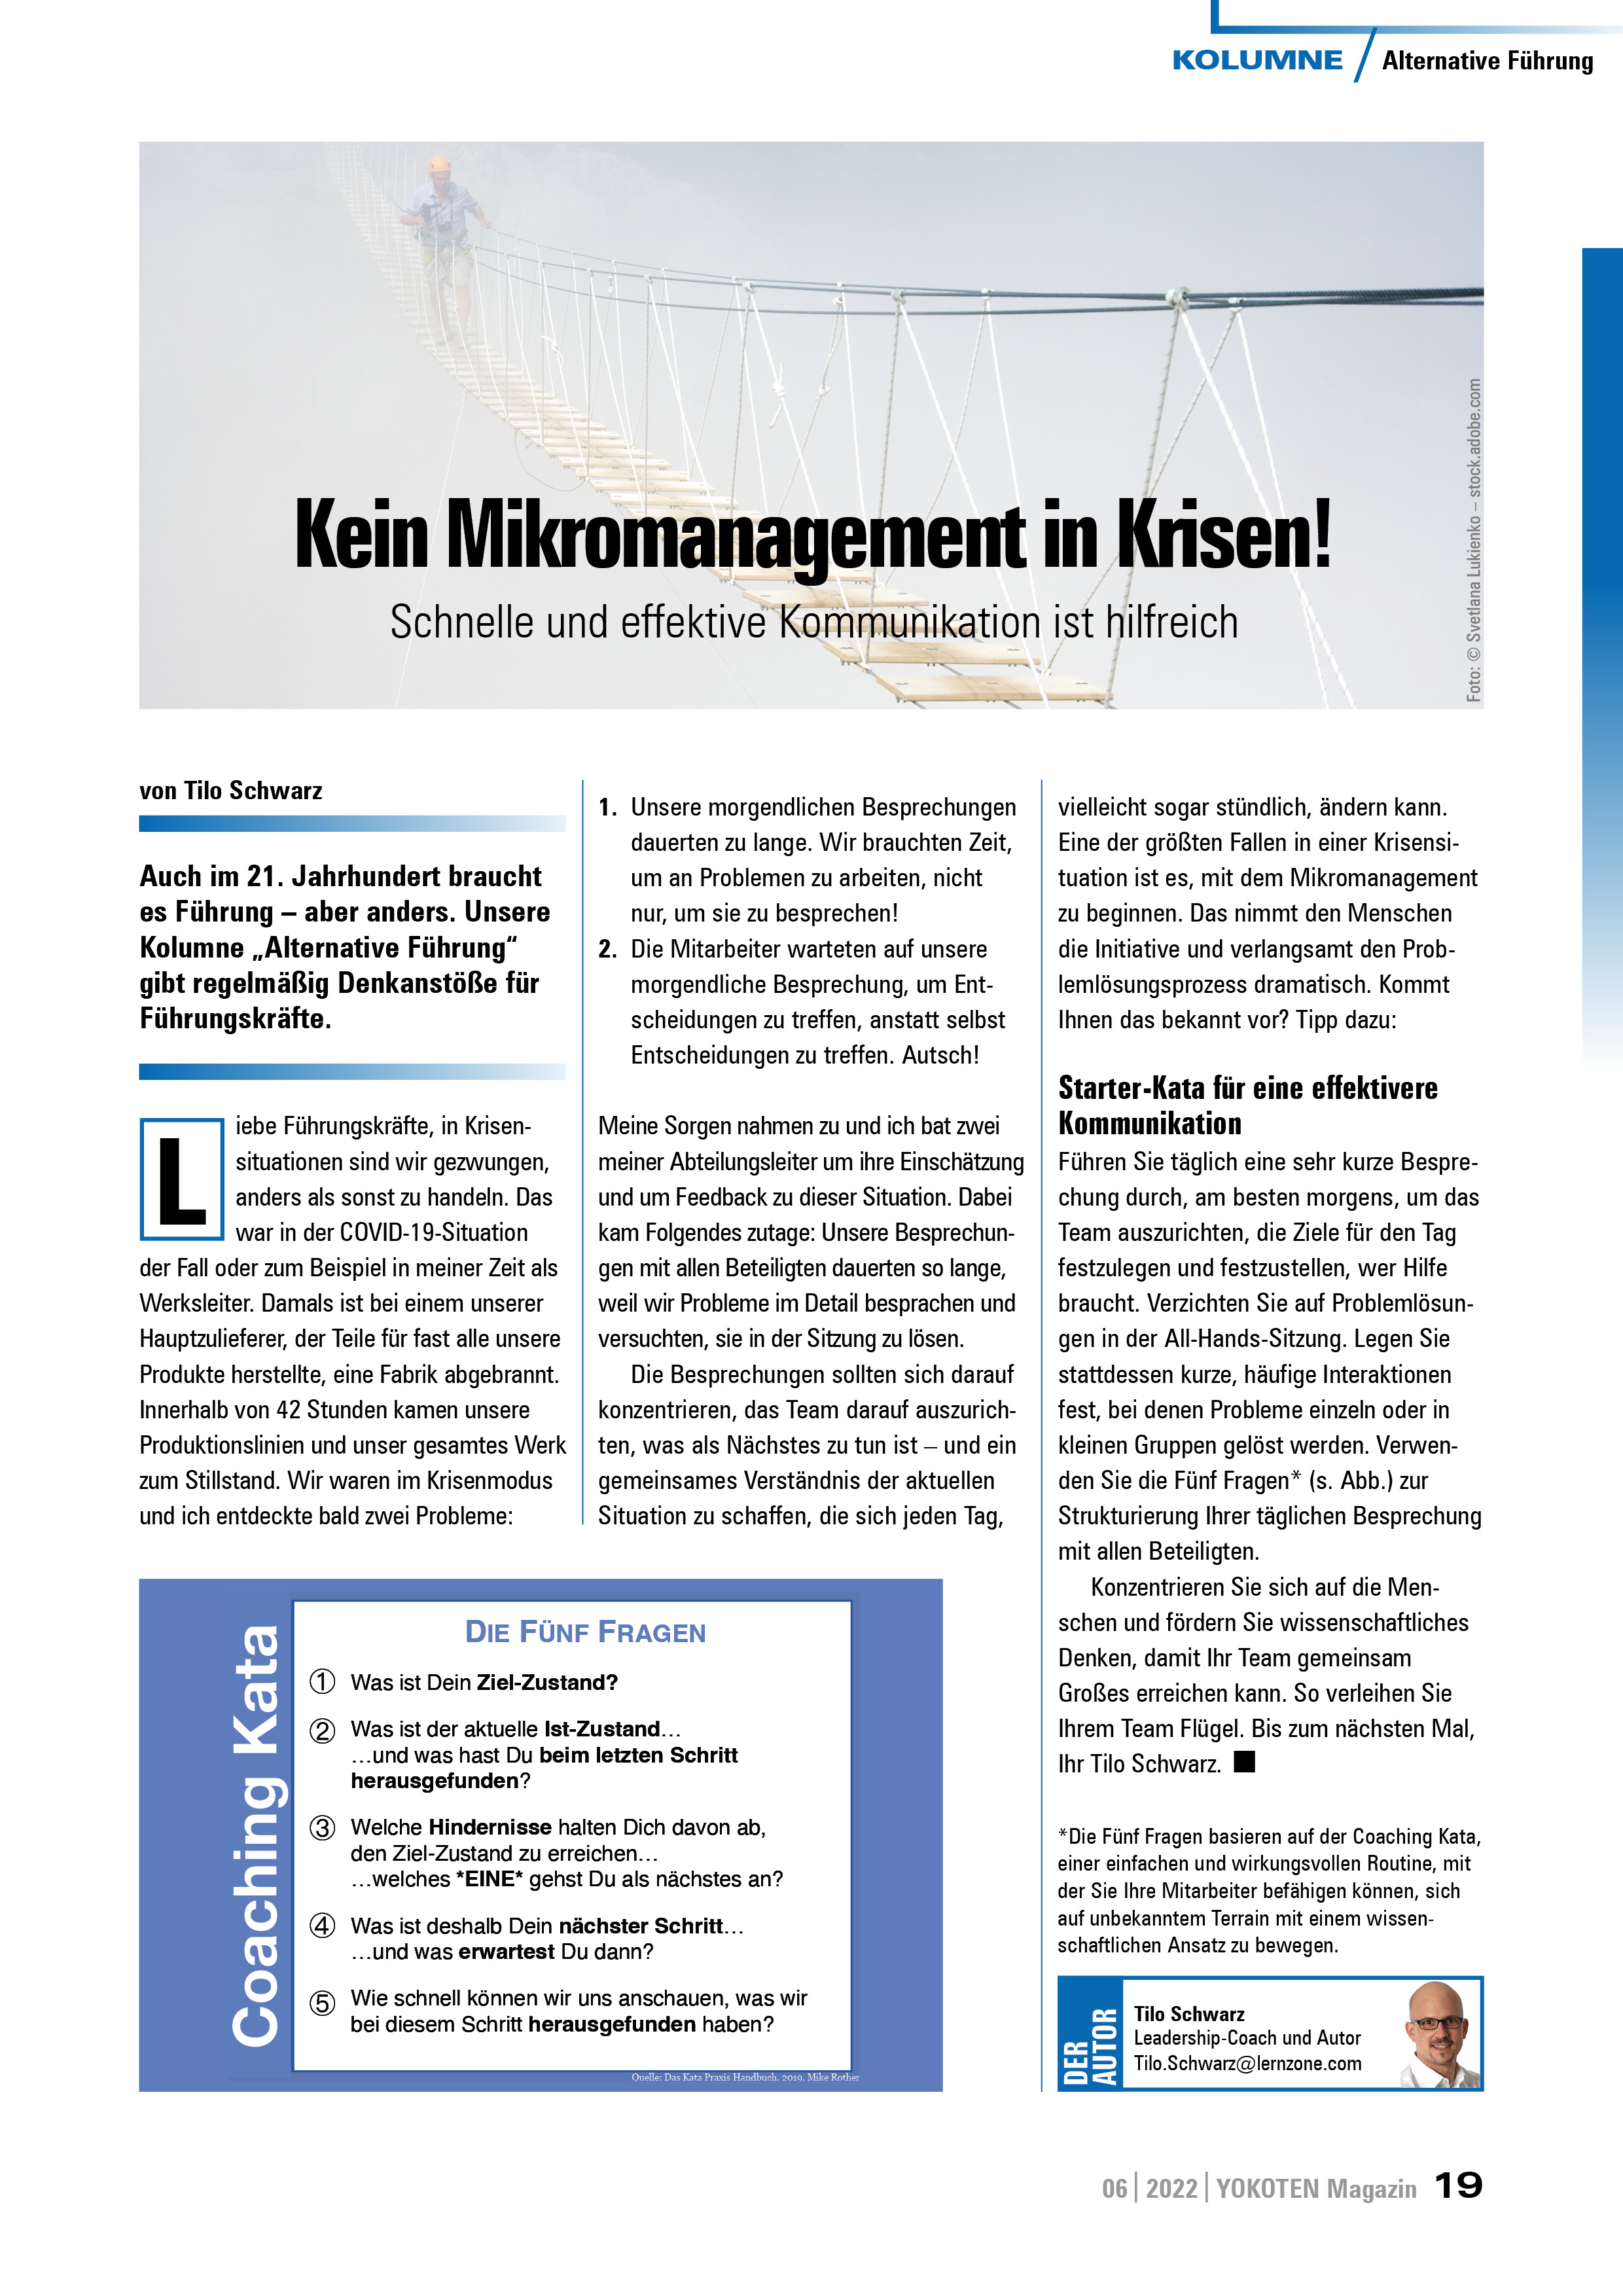 Kein Mikromanagement in Krisen! - Artikel aus Fachmagazin YOKOTEN 2022-06